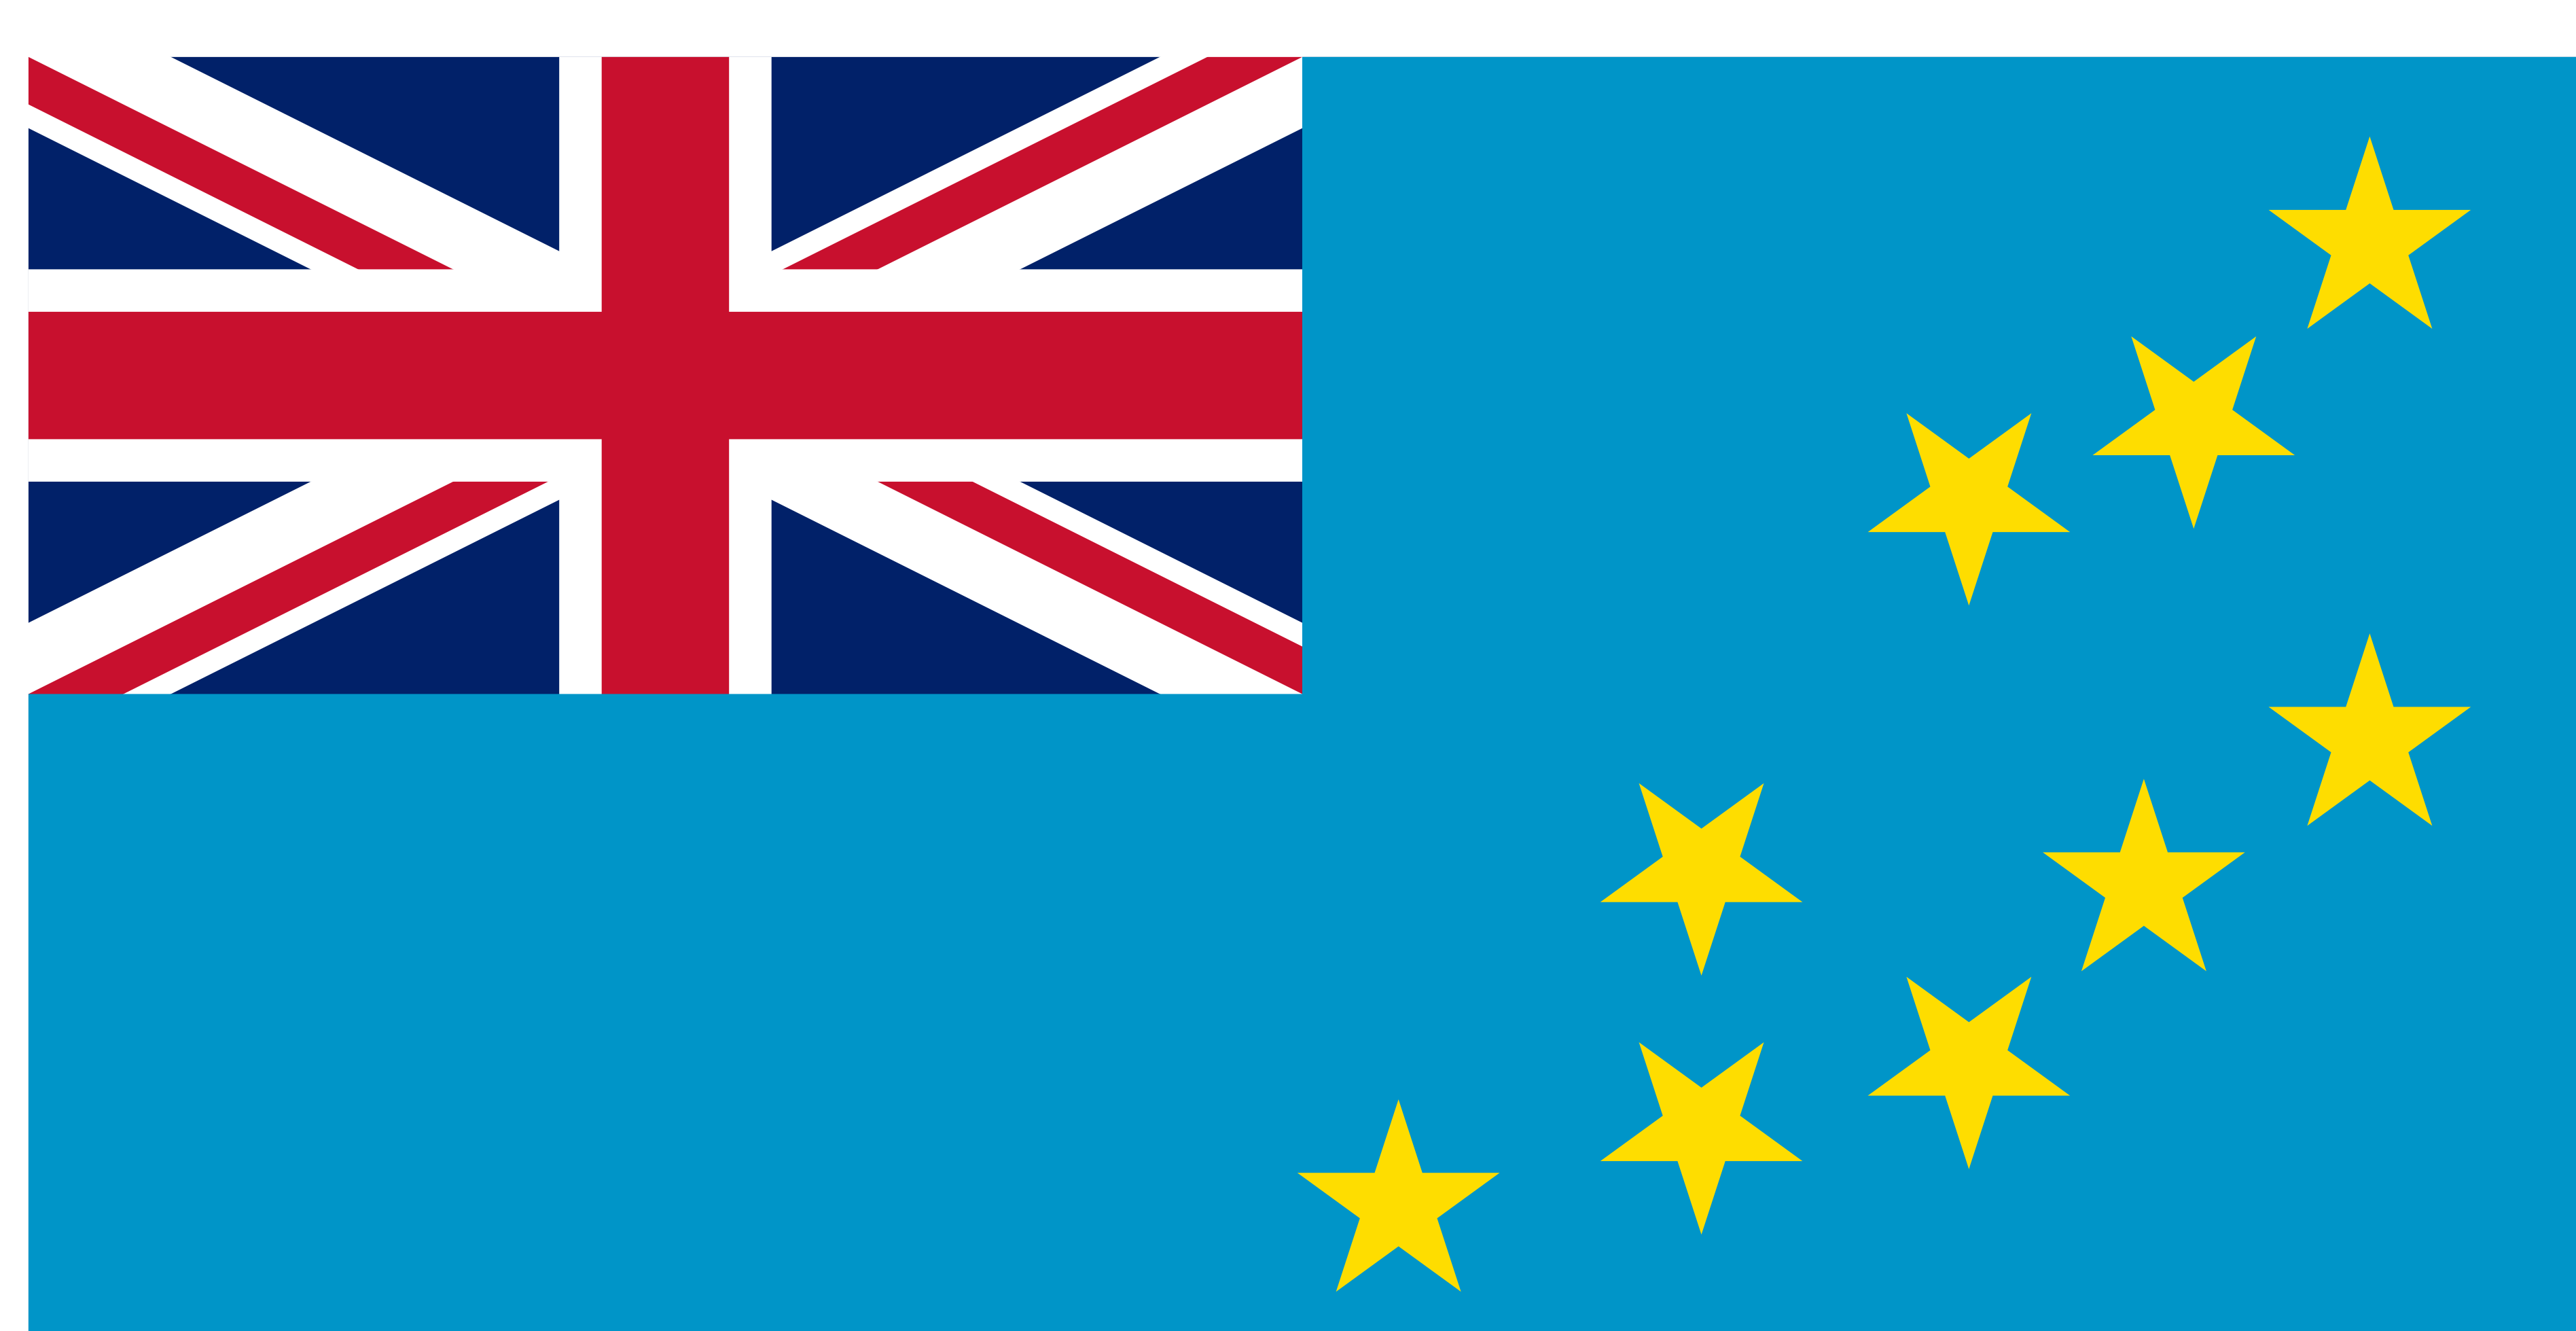 Tuvalu Flag Image - Free Download